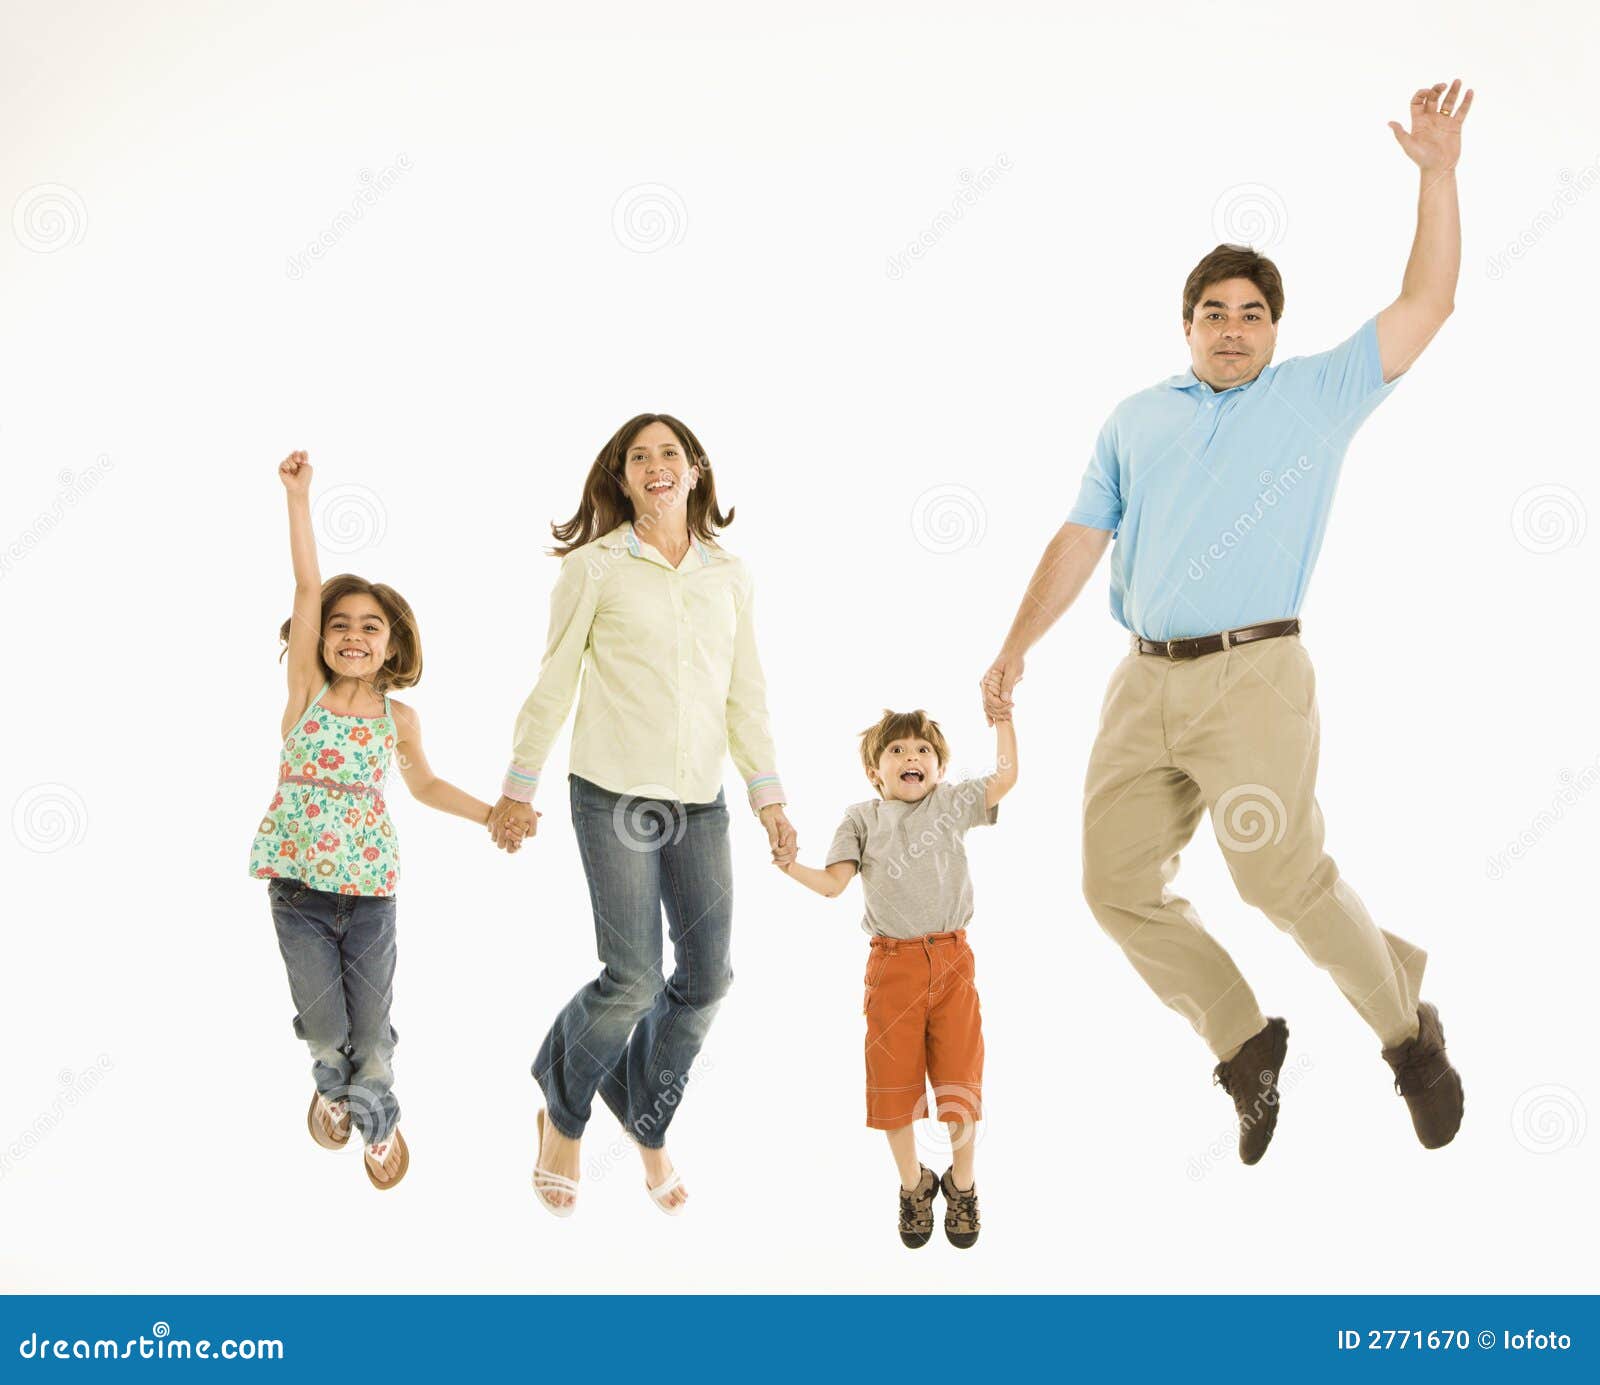 family-jumping-2771670.jpg